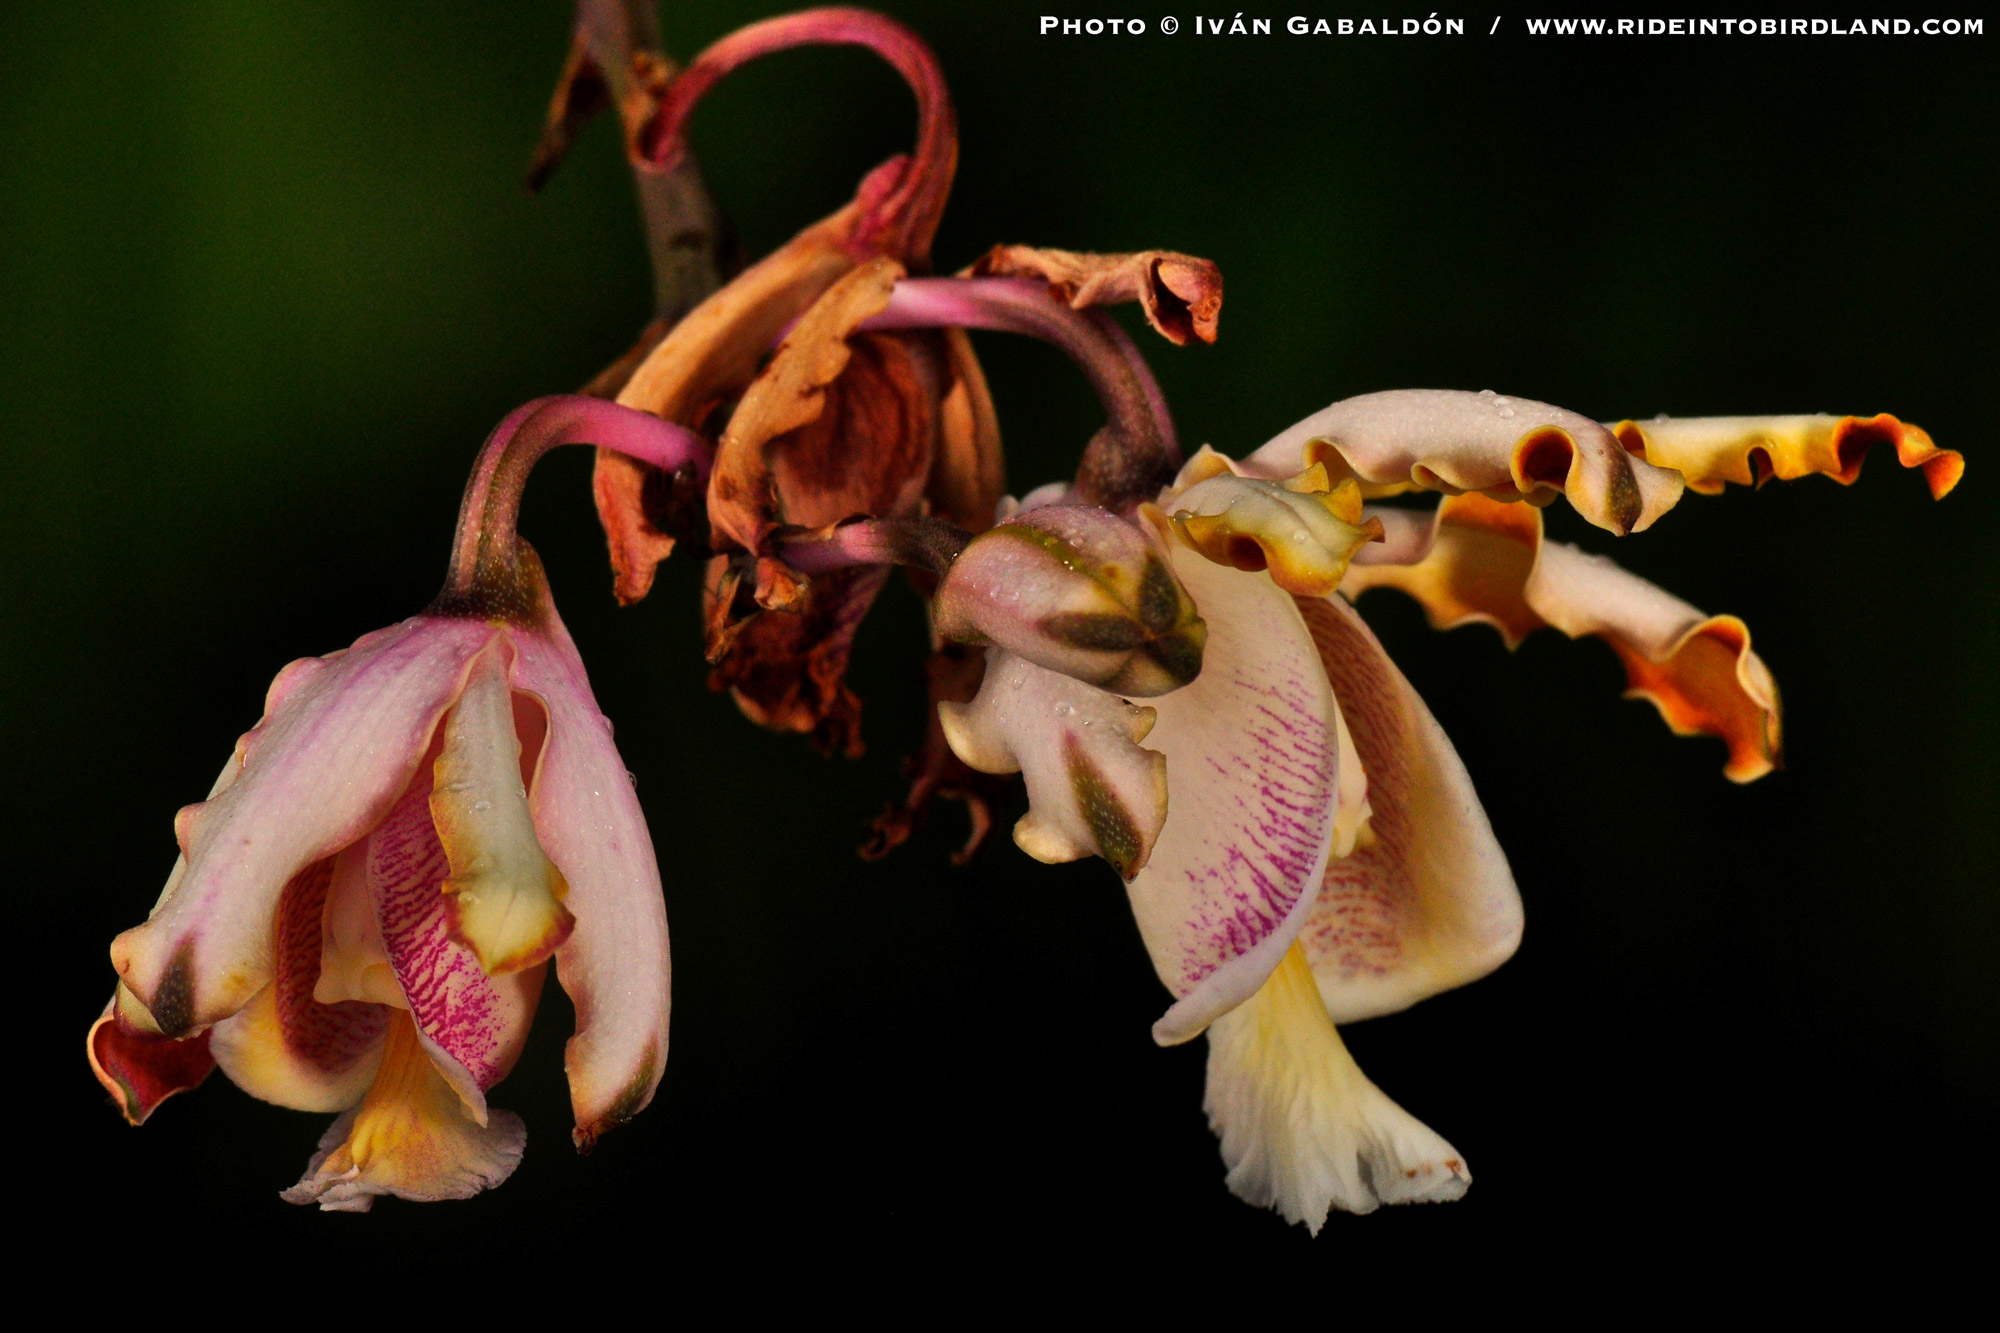 Flores abiertas de Myrmecophila christinae, orquídea endémica de la Peninsula de Yucatán. (Foto © Iván Gabaldón).